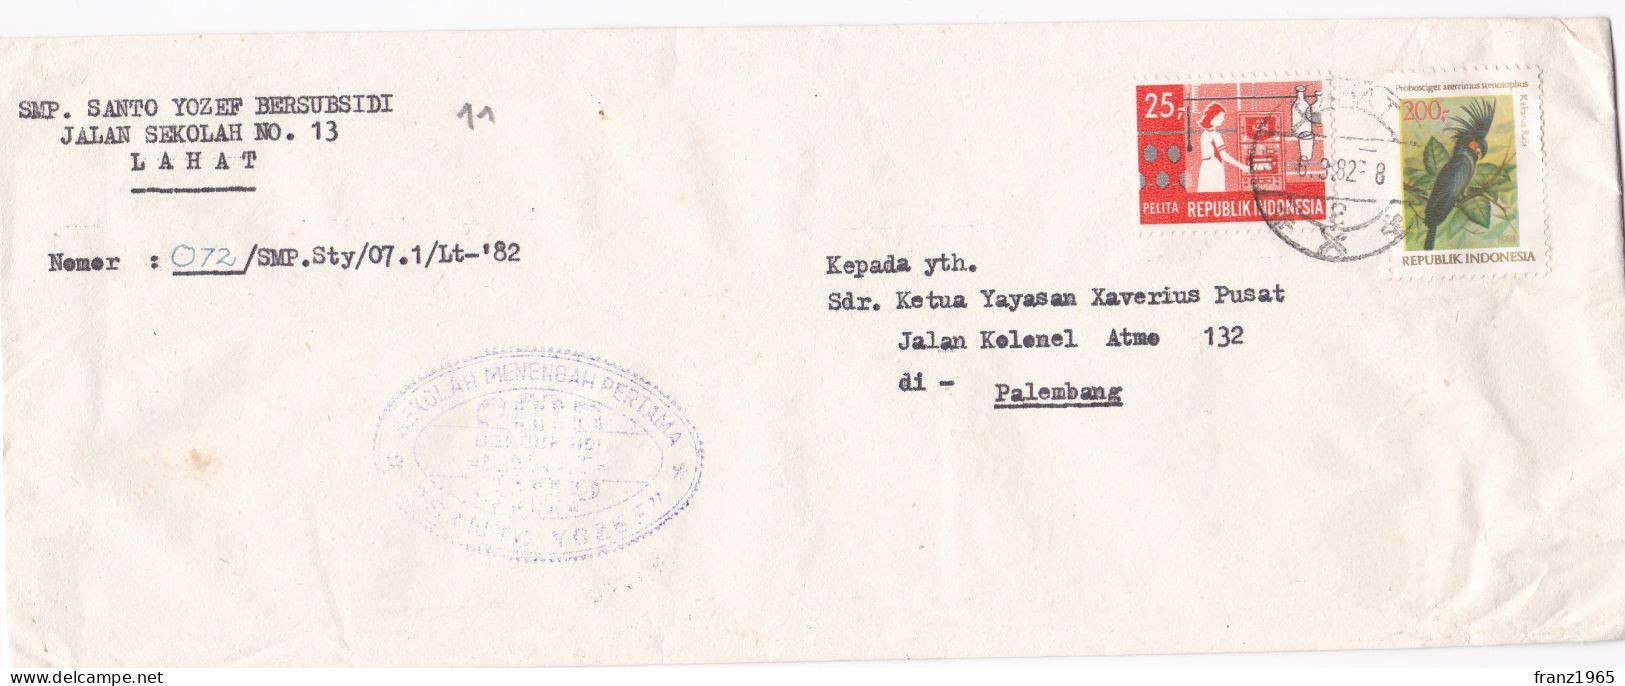 Postal History - 1982 - Indonesien